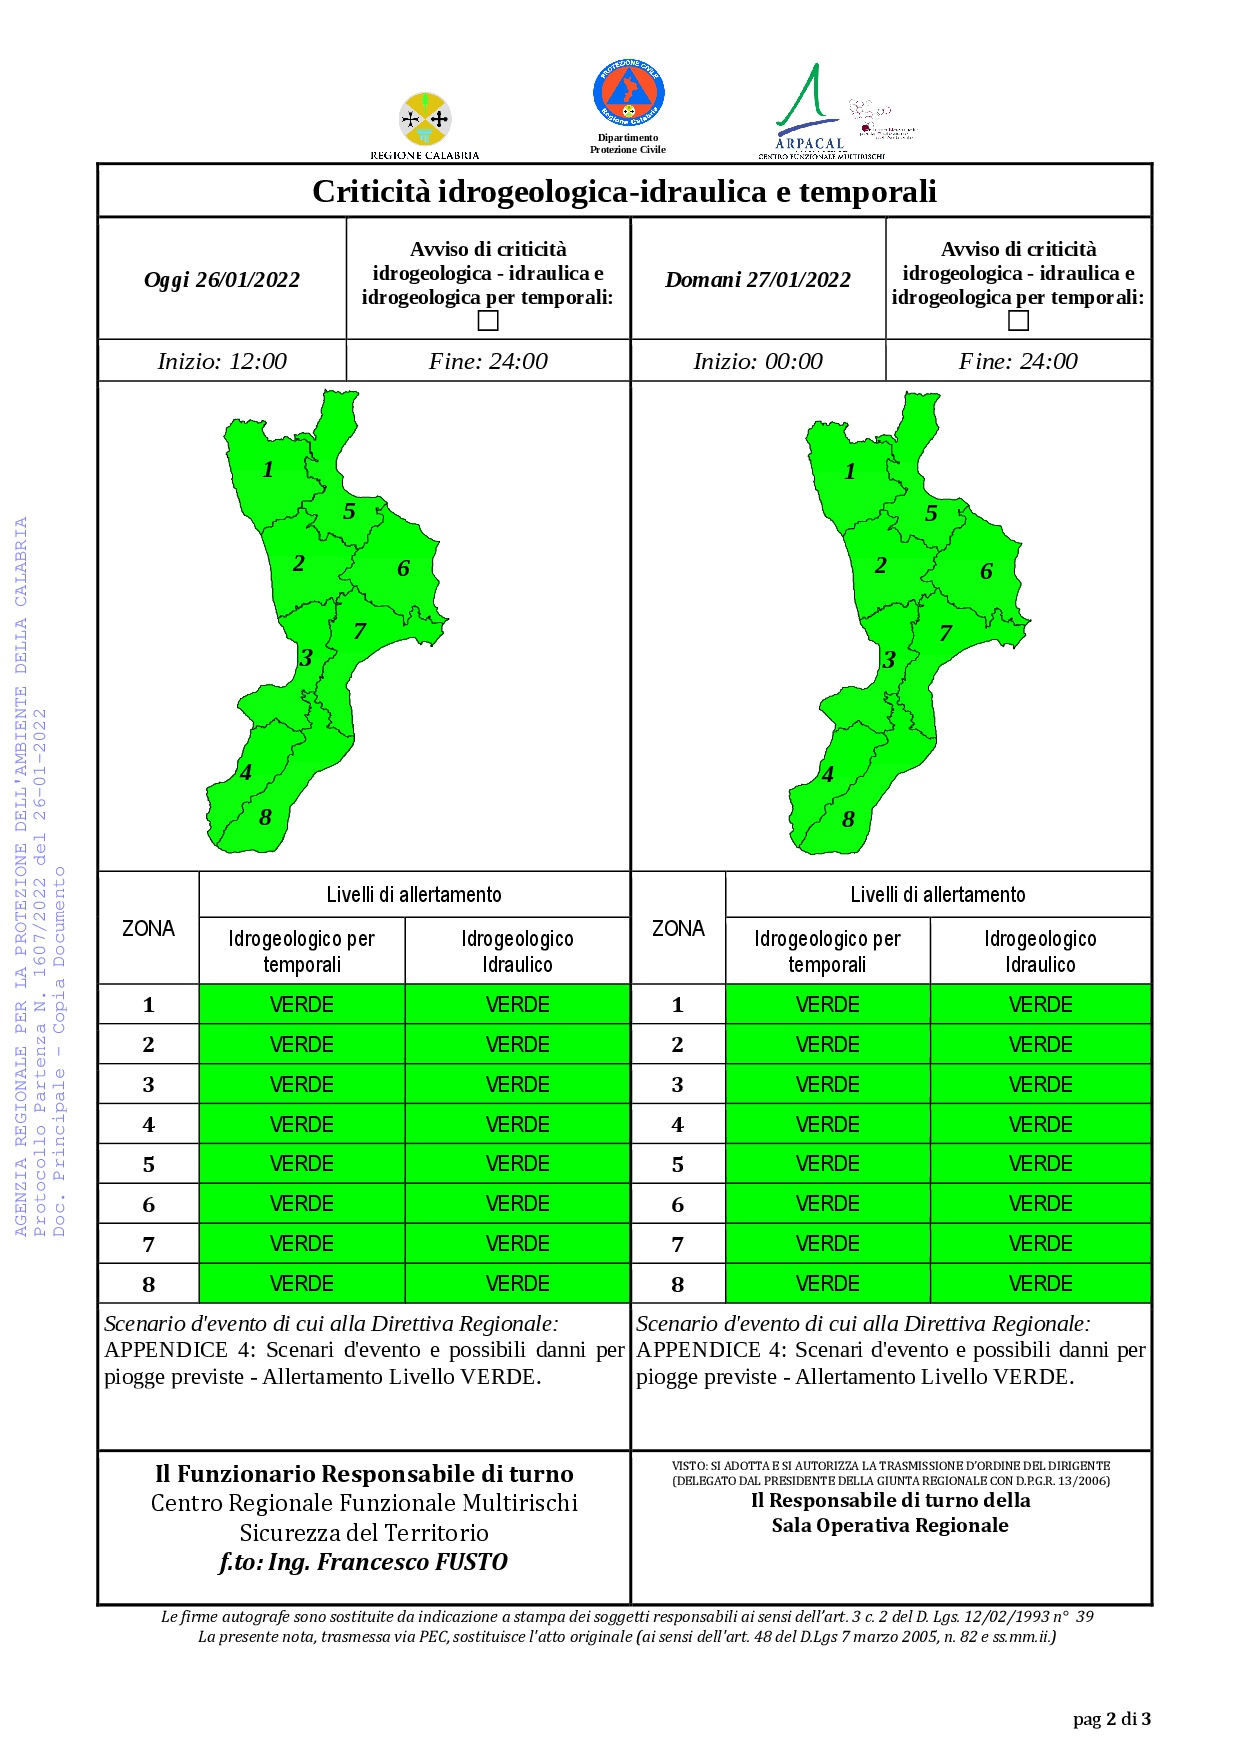 Criticità idrogeologica-idraulica e temporali in Calabria 26-01-2022